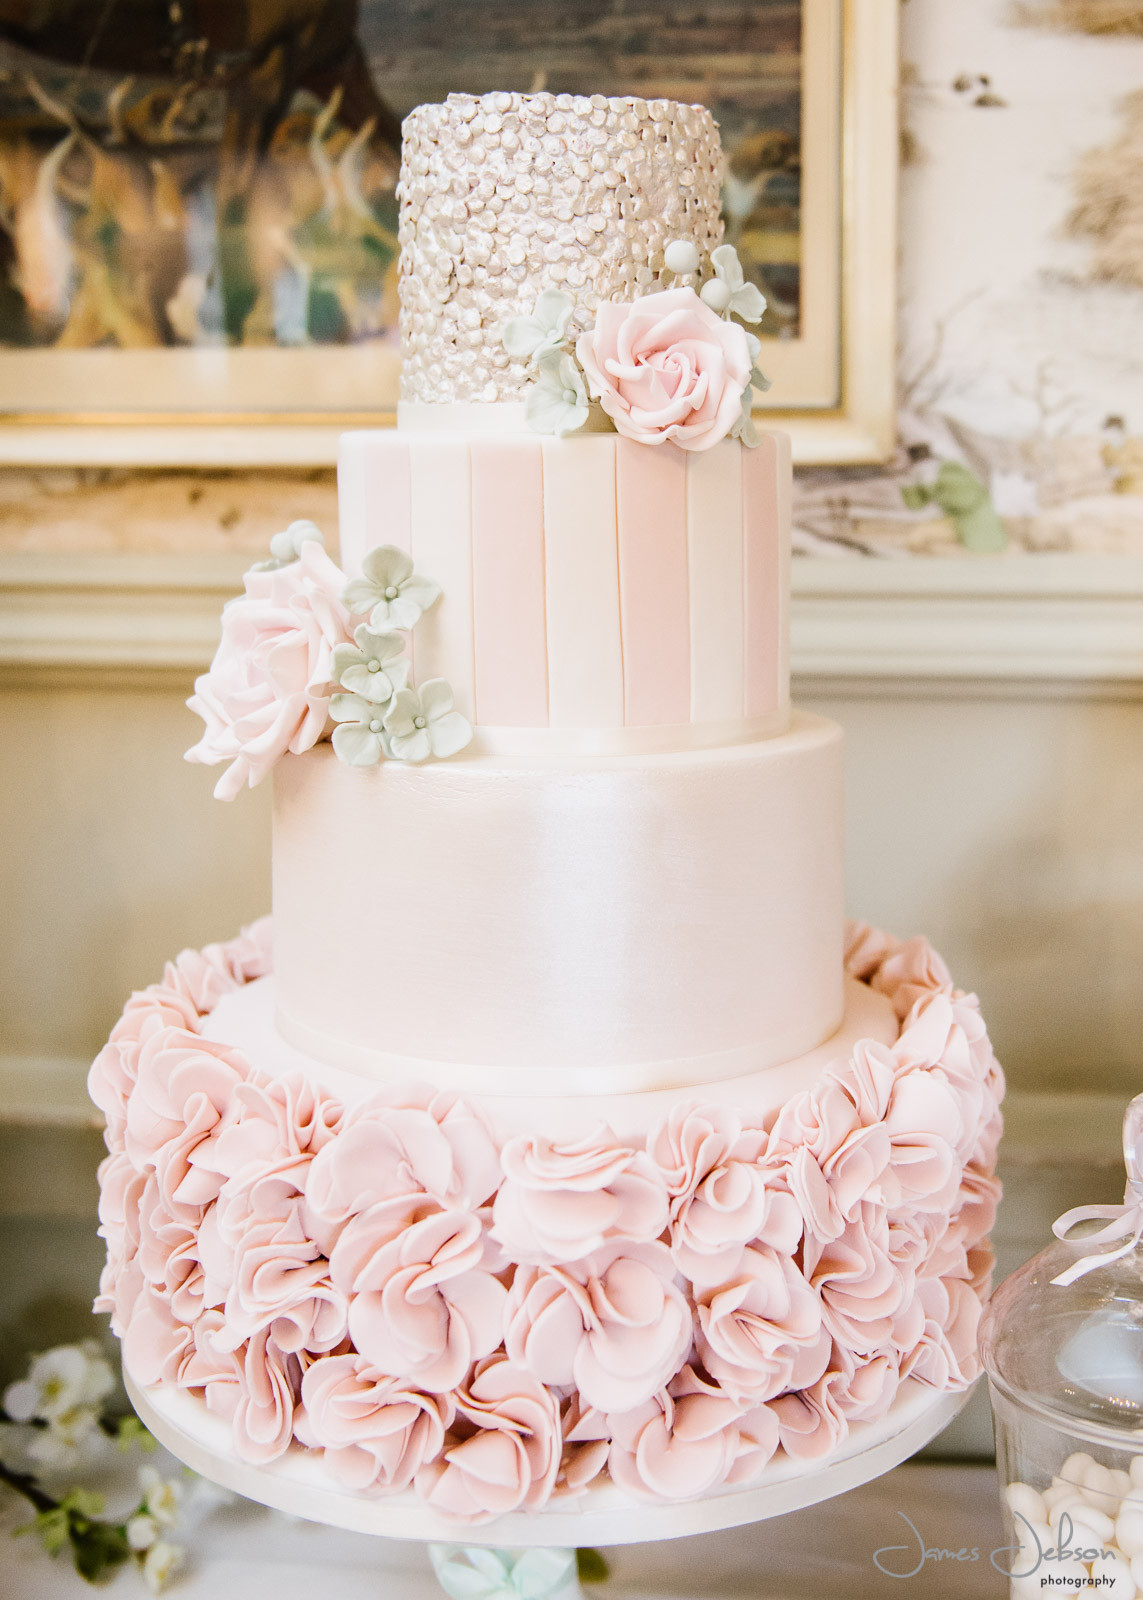 Photos Of Wedding Cakes
 Award winning wedding cakes idea in 2017